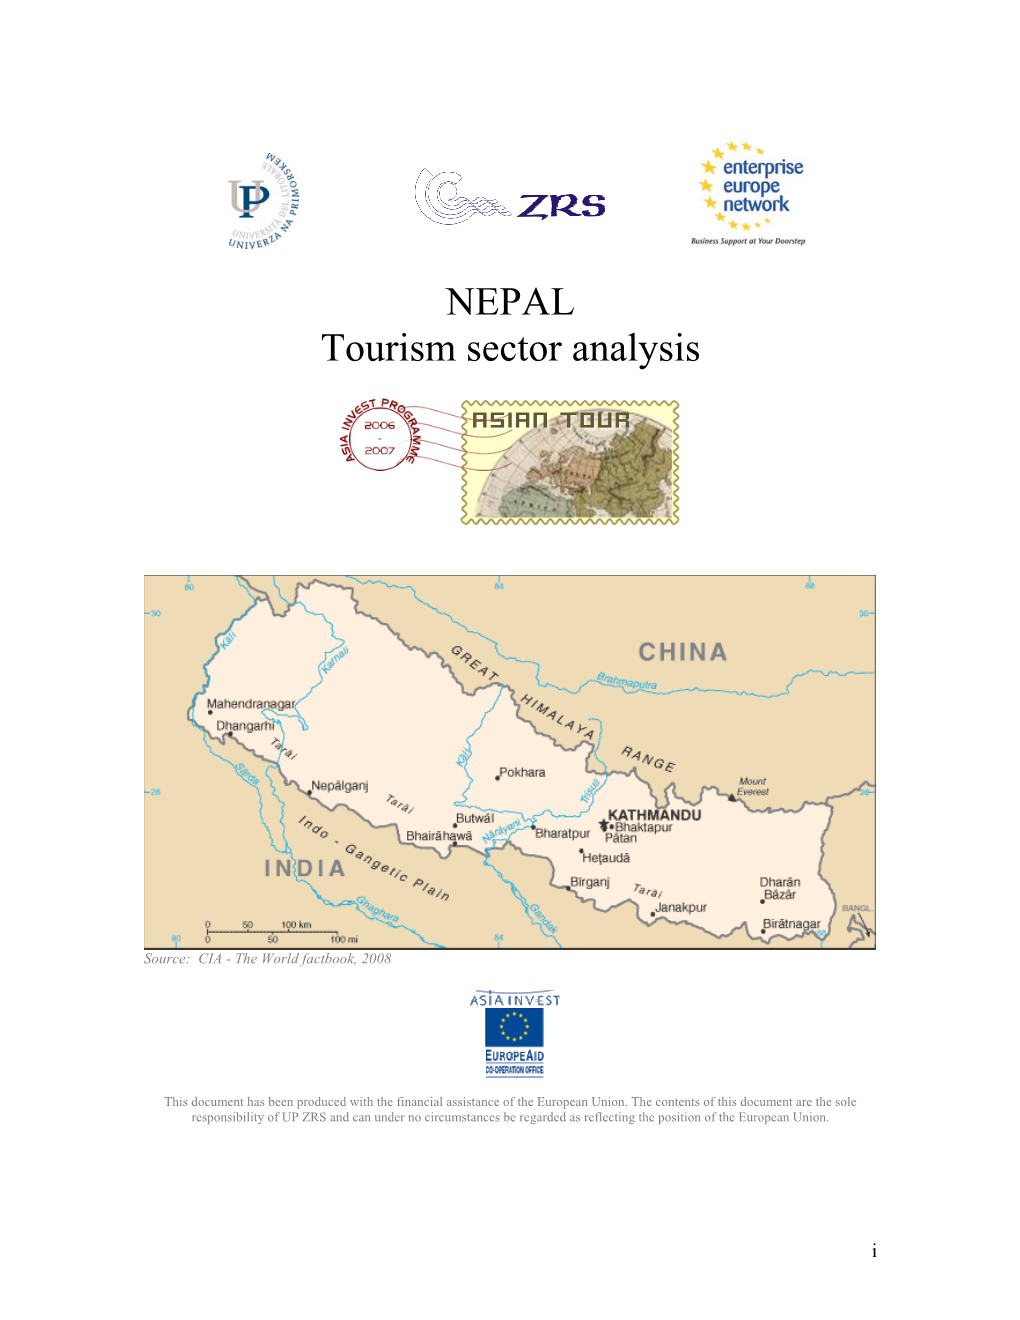 NEPAL Tourism Sector Analysis